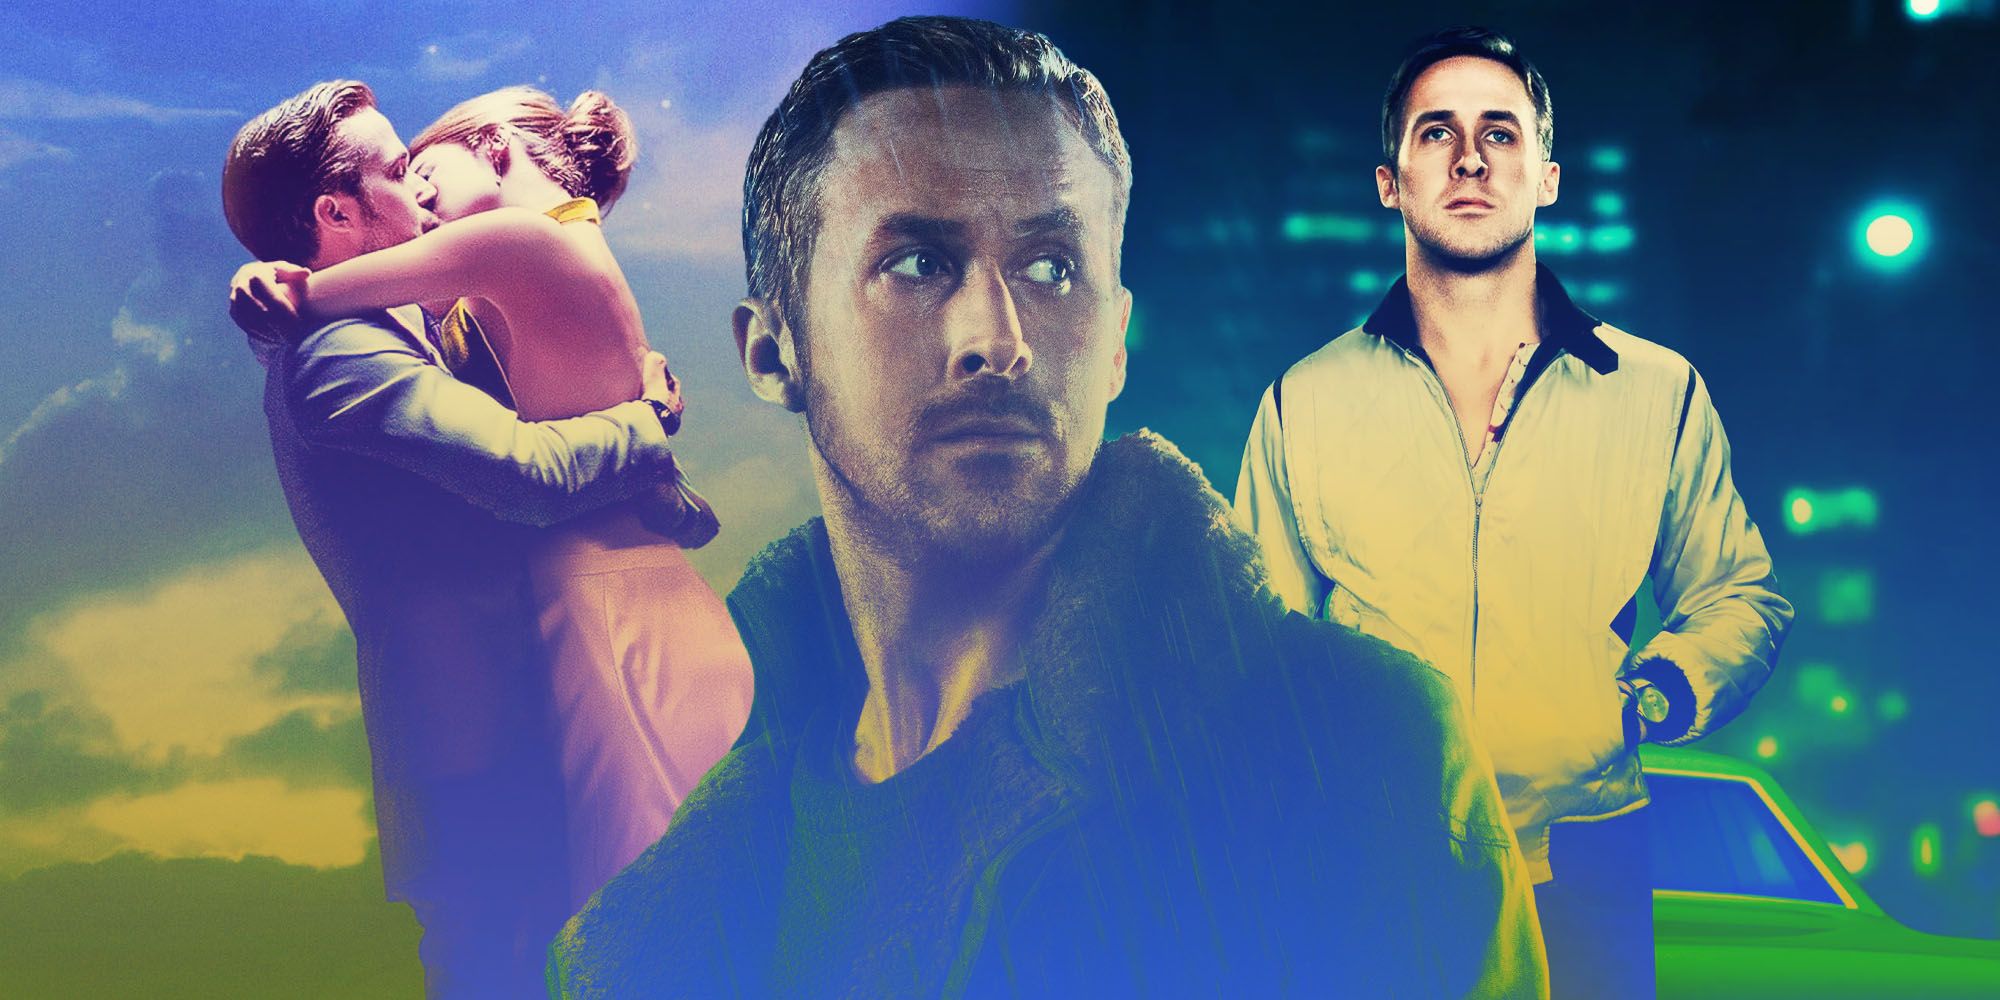 Ryan-gosling-movies-ranked-worst-best